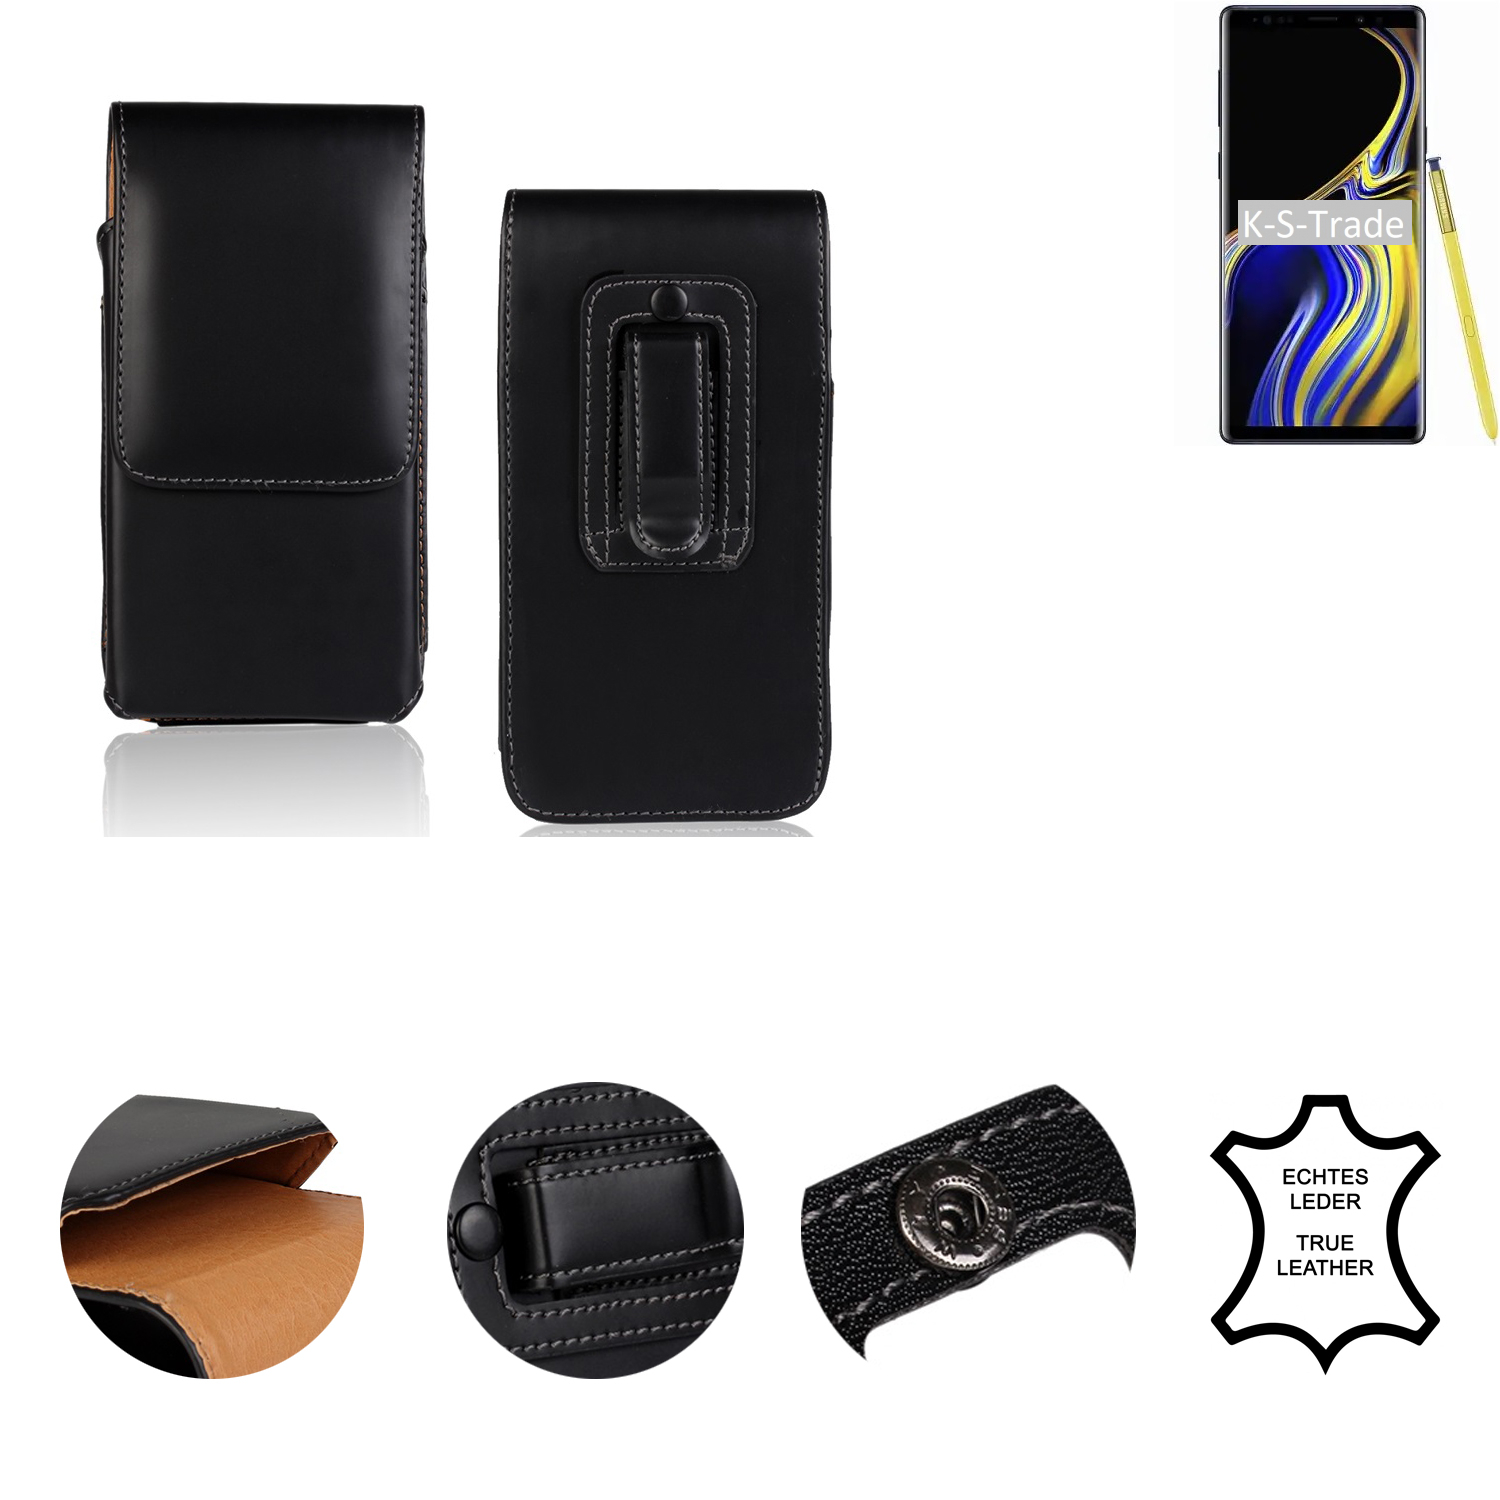 Samsung, K-S-TRADE Note schwarz Schutzhülle, Holster Holster, 9, Galaxy